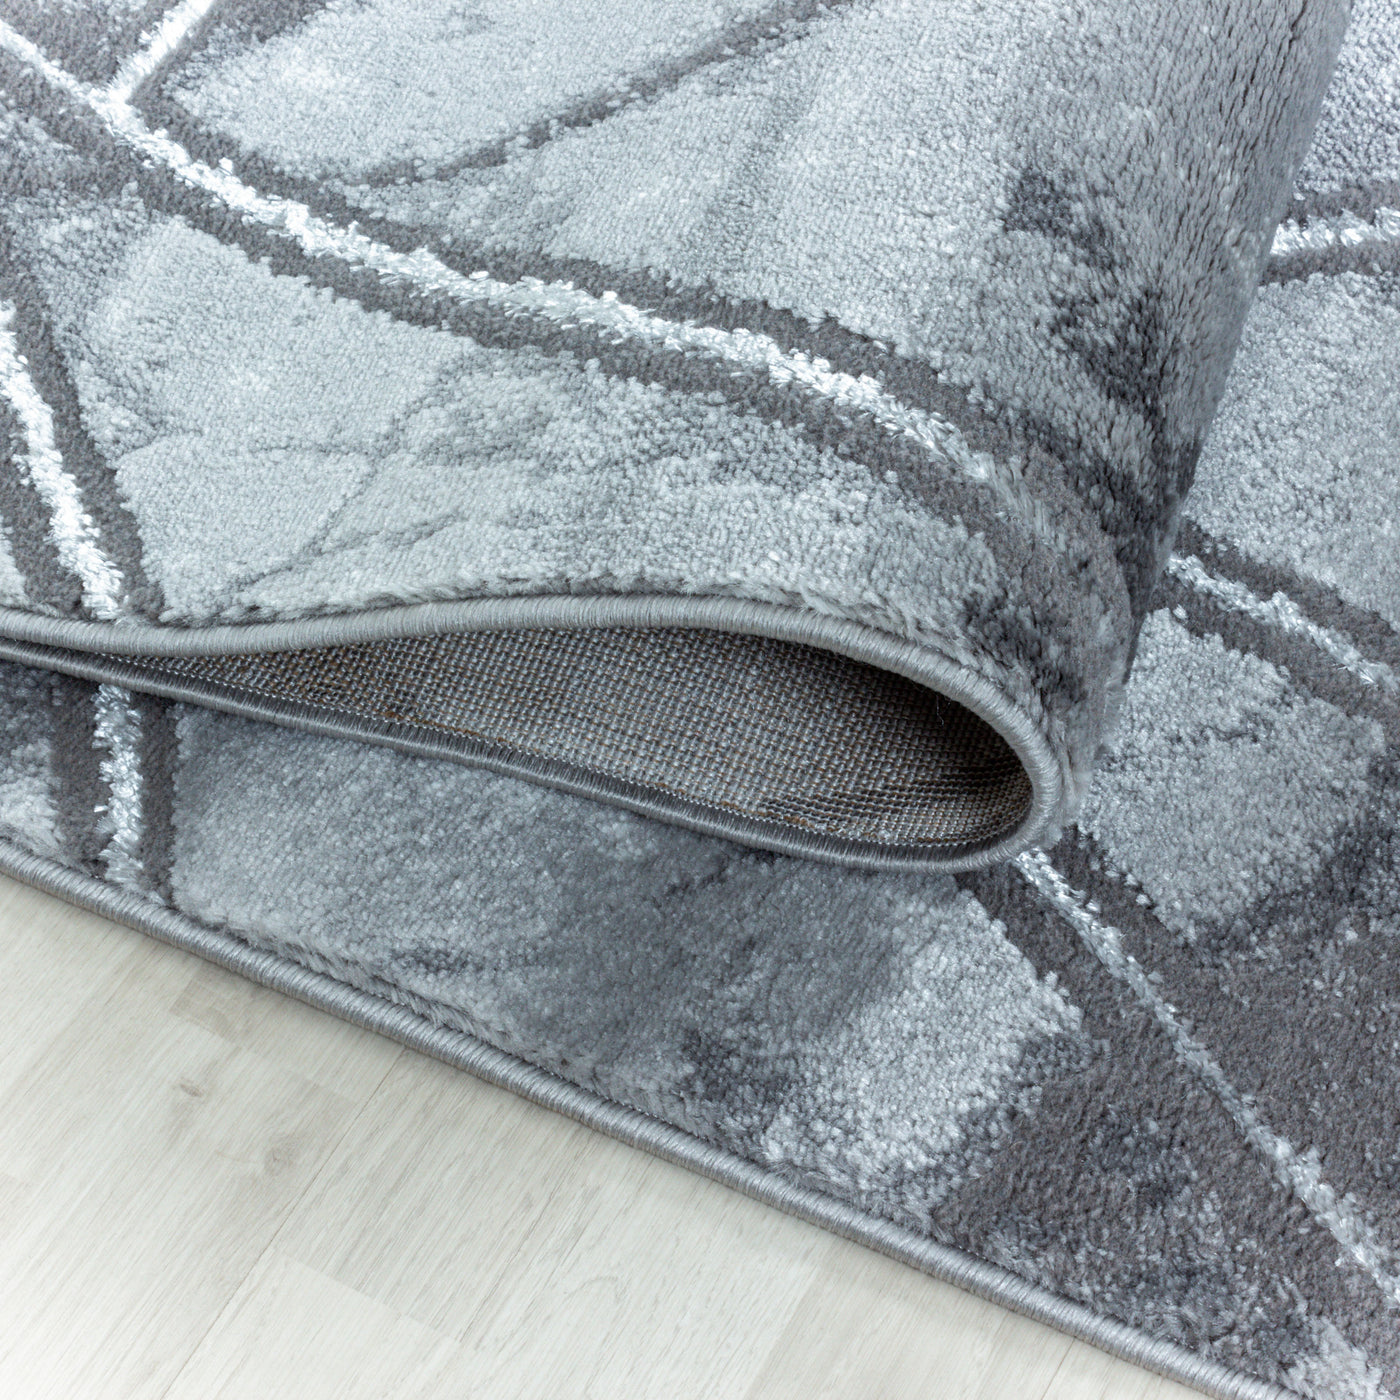 Kurzflor Teppich JUNA Wohnzimmer Marmoriert 3D-Effekt Abstrakt